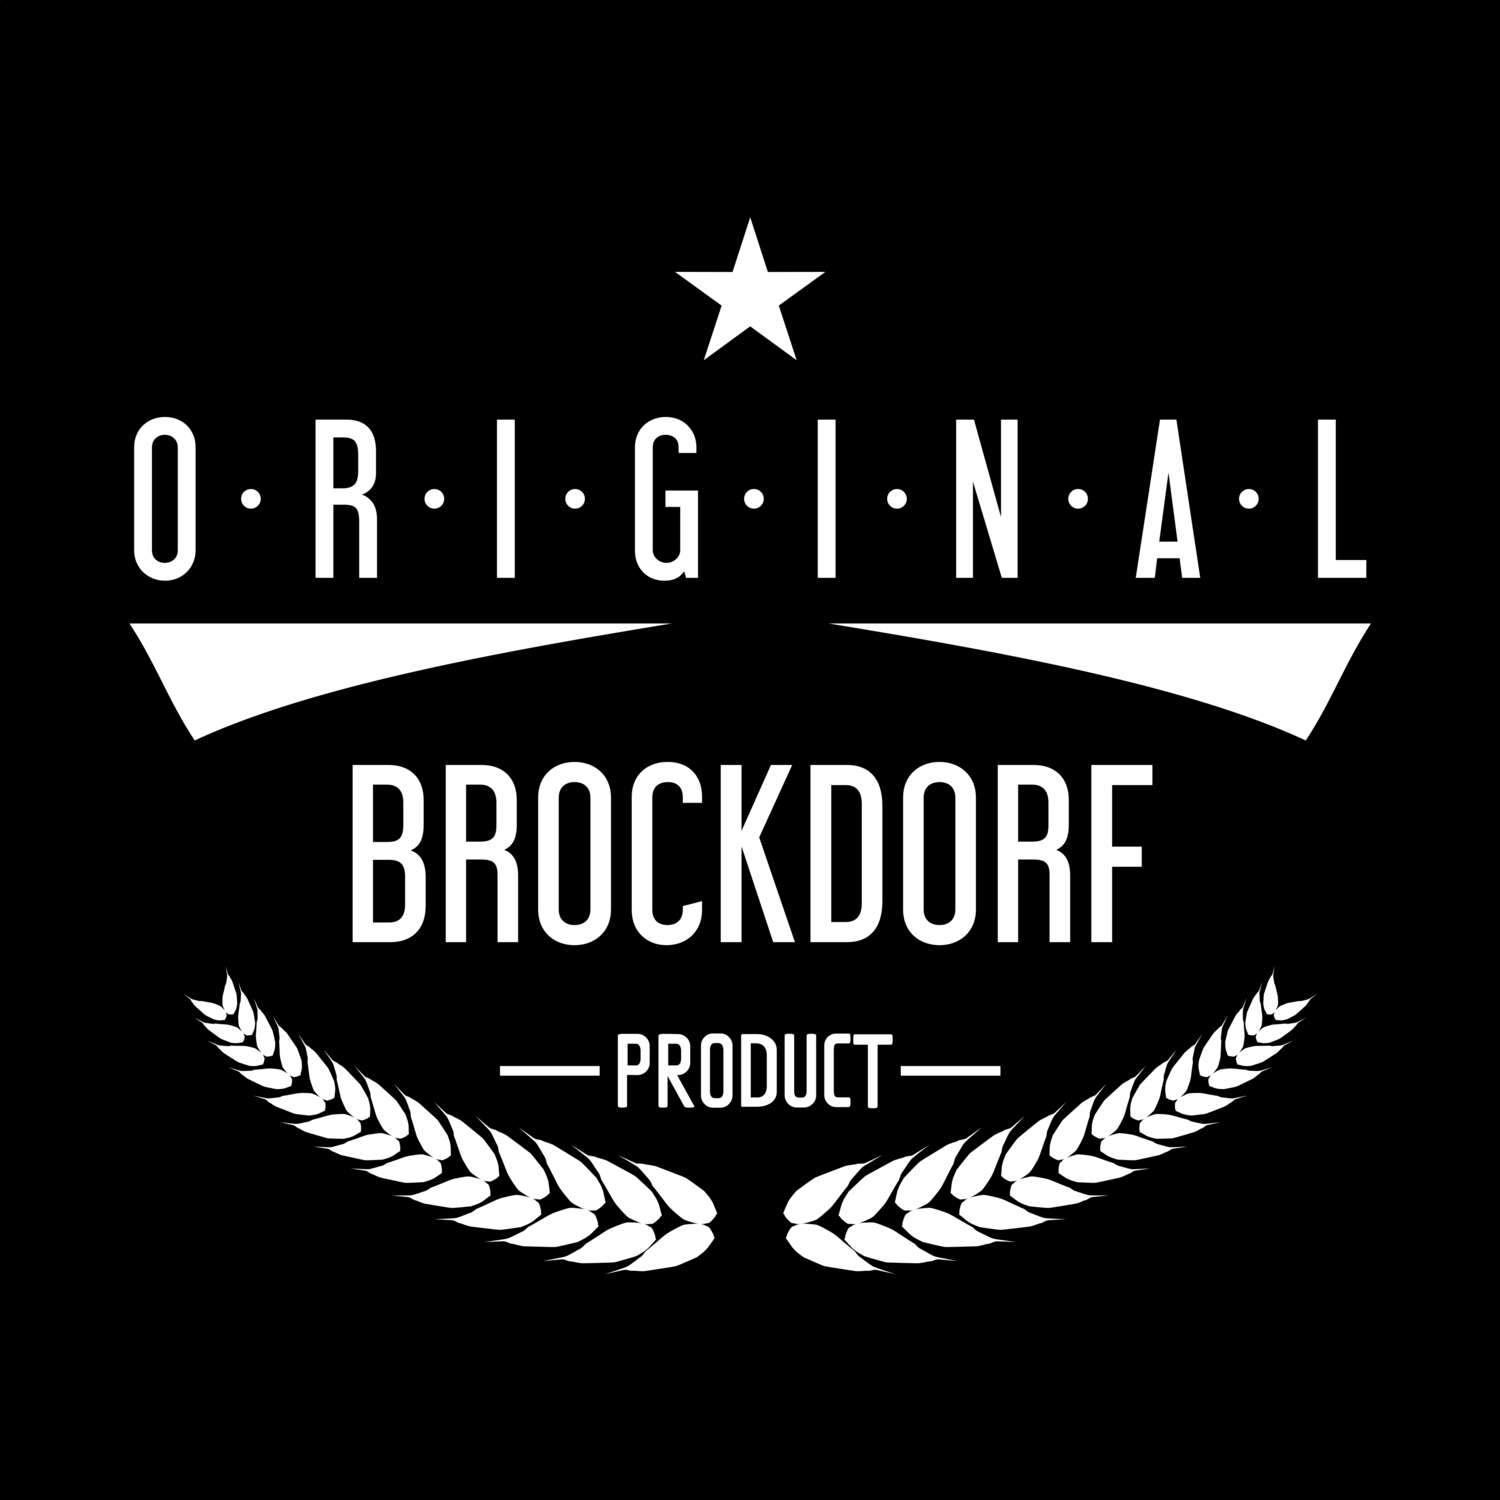 Brockdorf T-Shirt »Original Product«